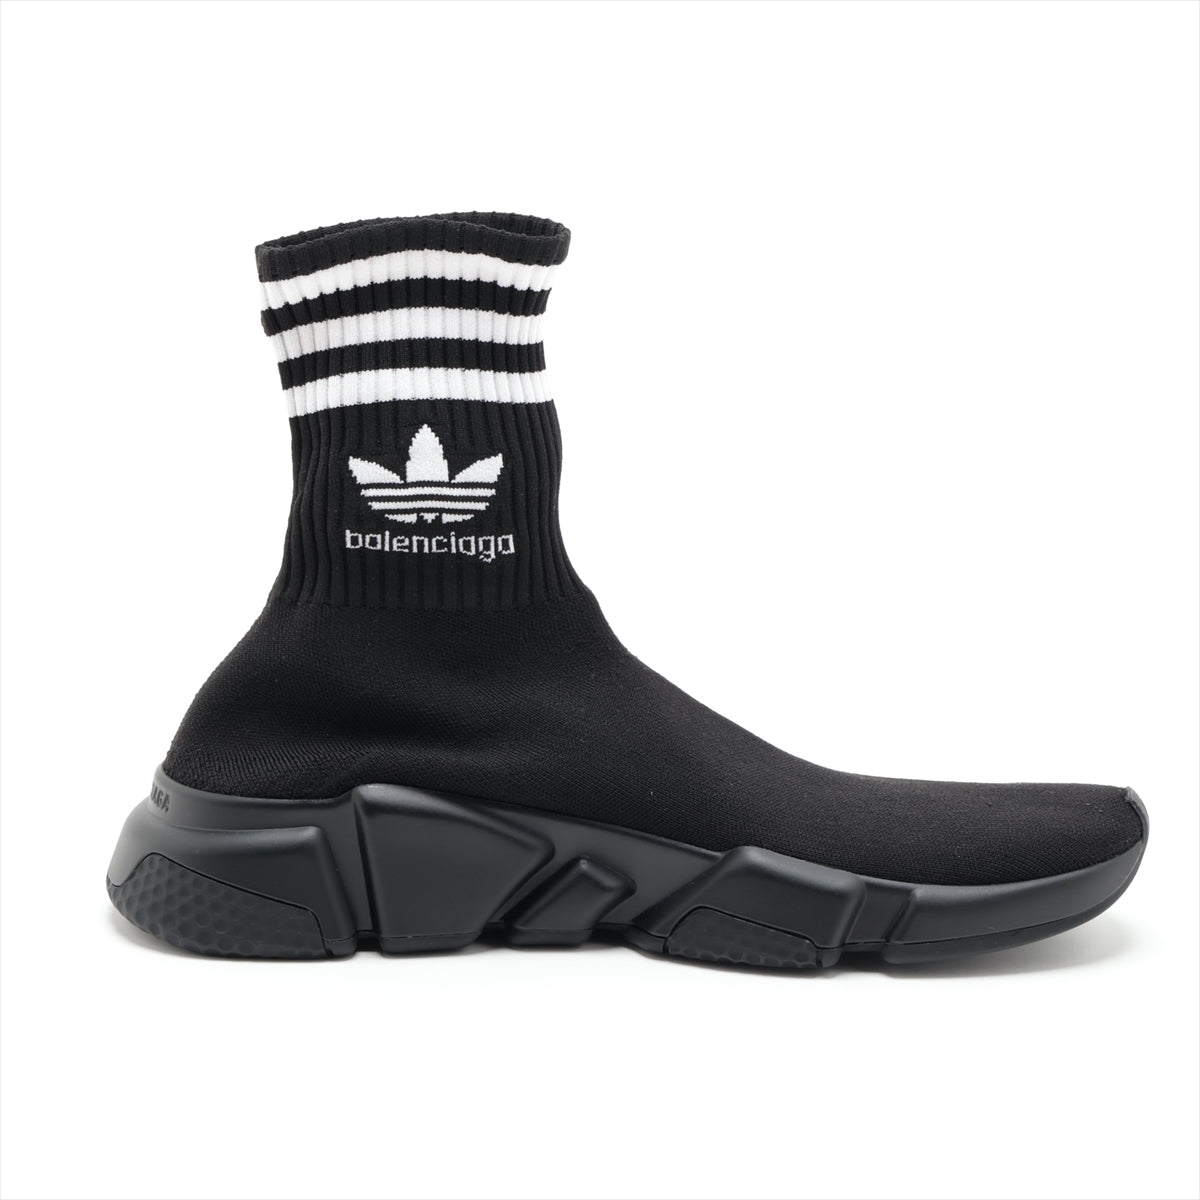 Balenciaga x adidas Speed trainer Knit Sneakers 39 Men's Black 7171591 Socks sneakers